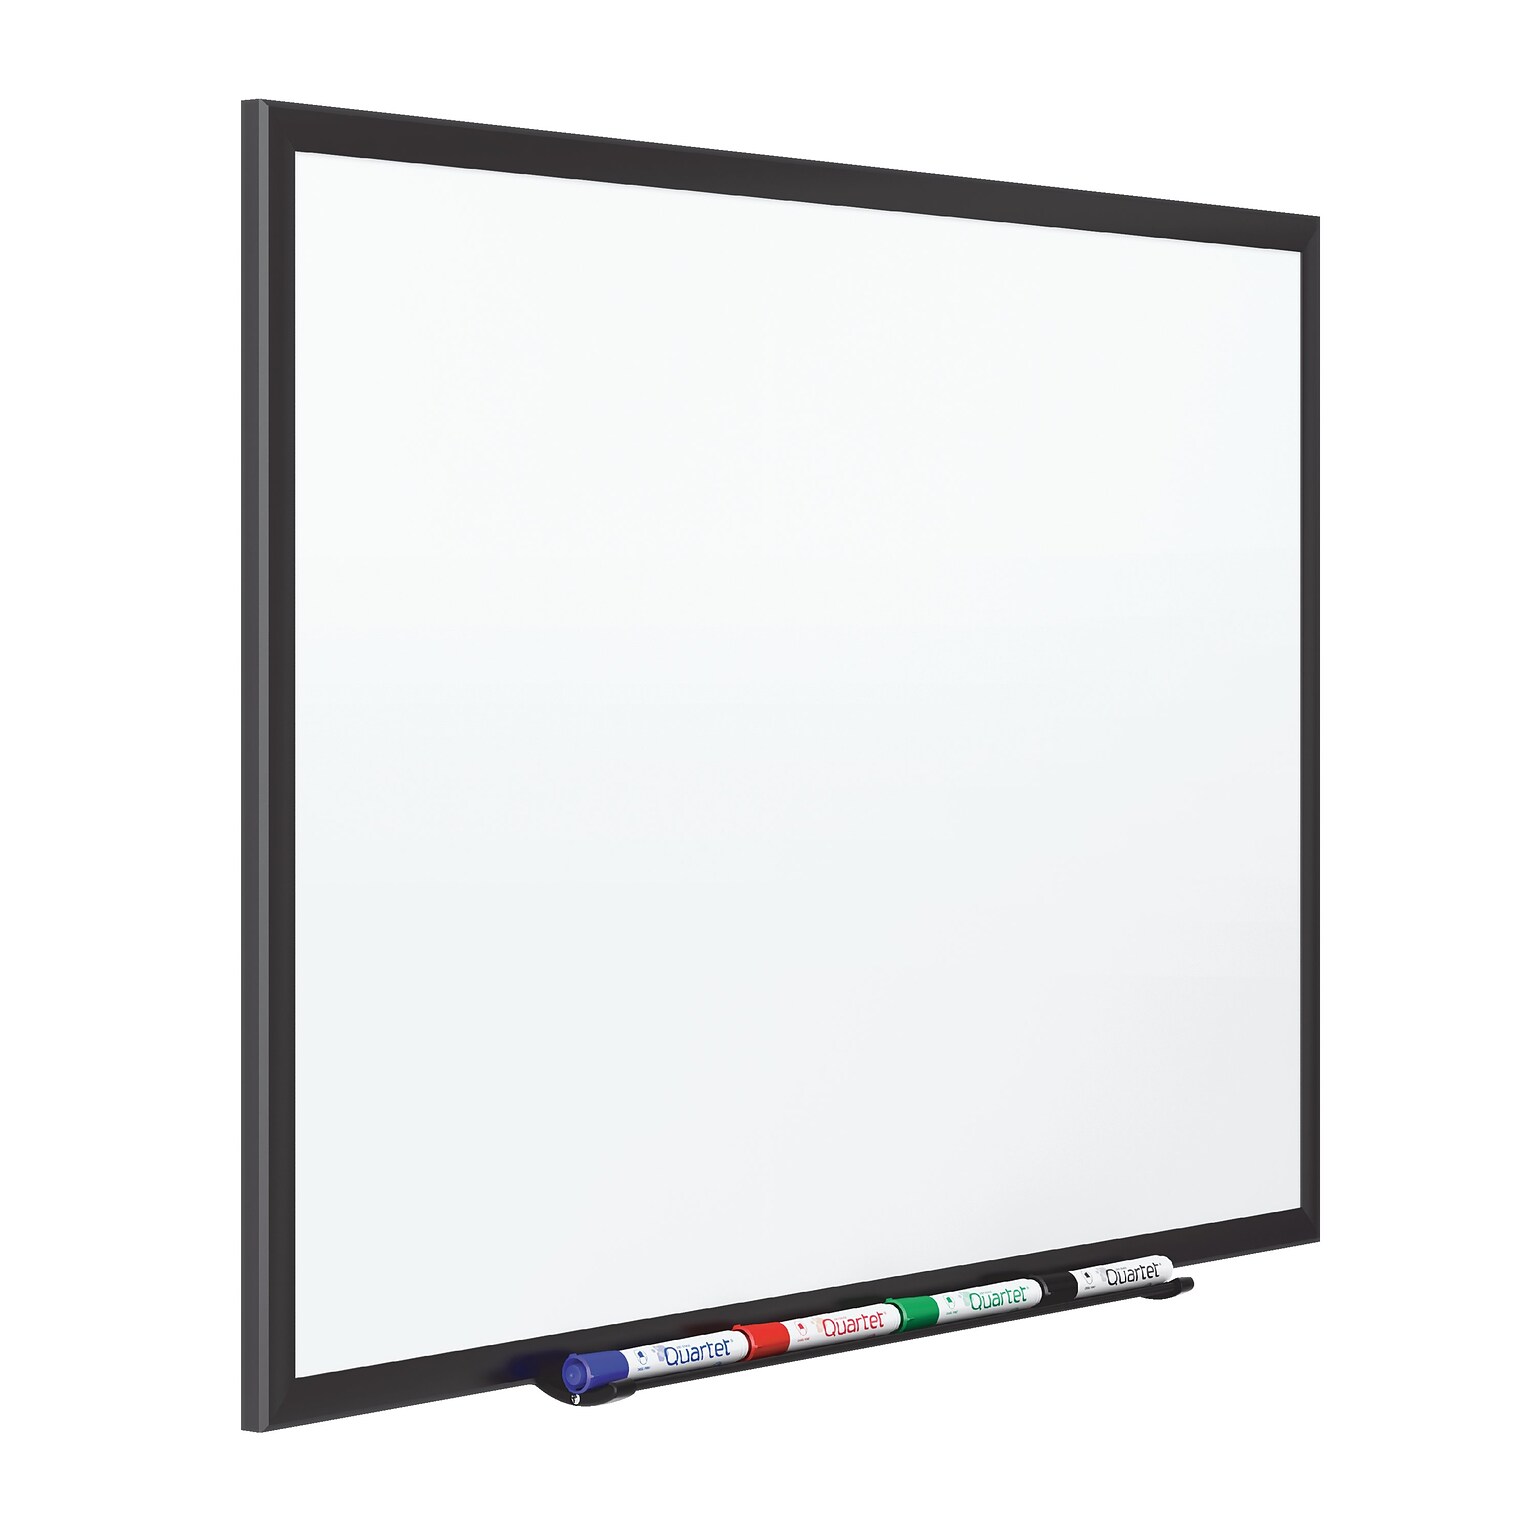 Quartet Premium DuraMax Porcelain Dry-Erase Whiteboard, Aluminum Frame, 5 x 3 (2545B)